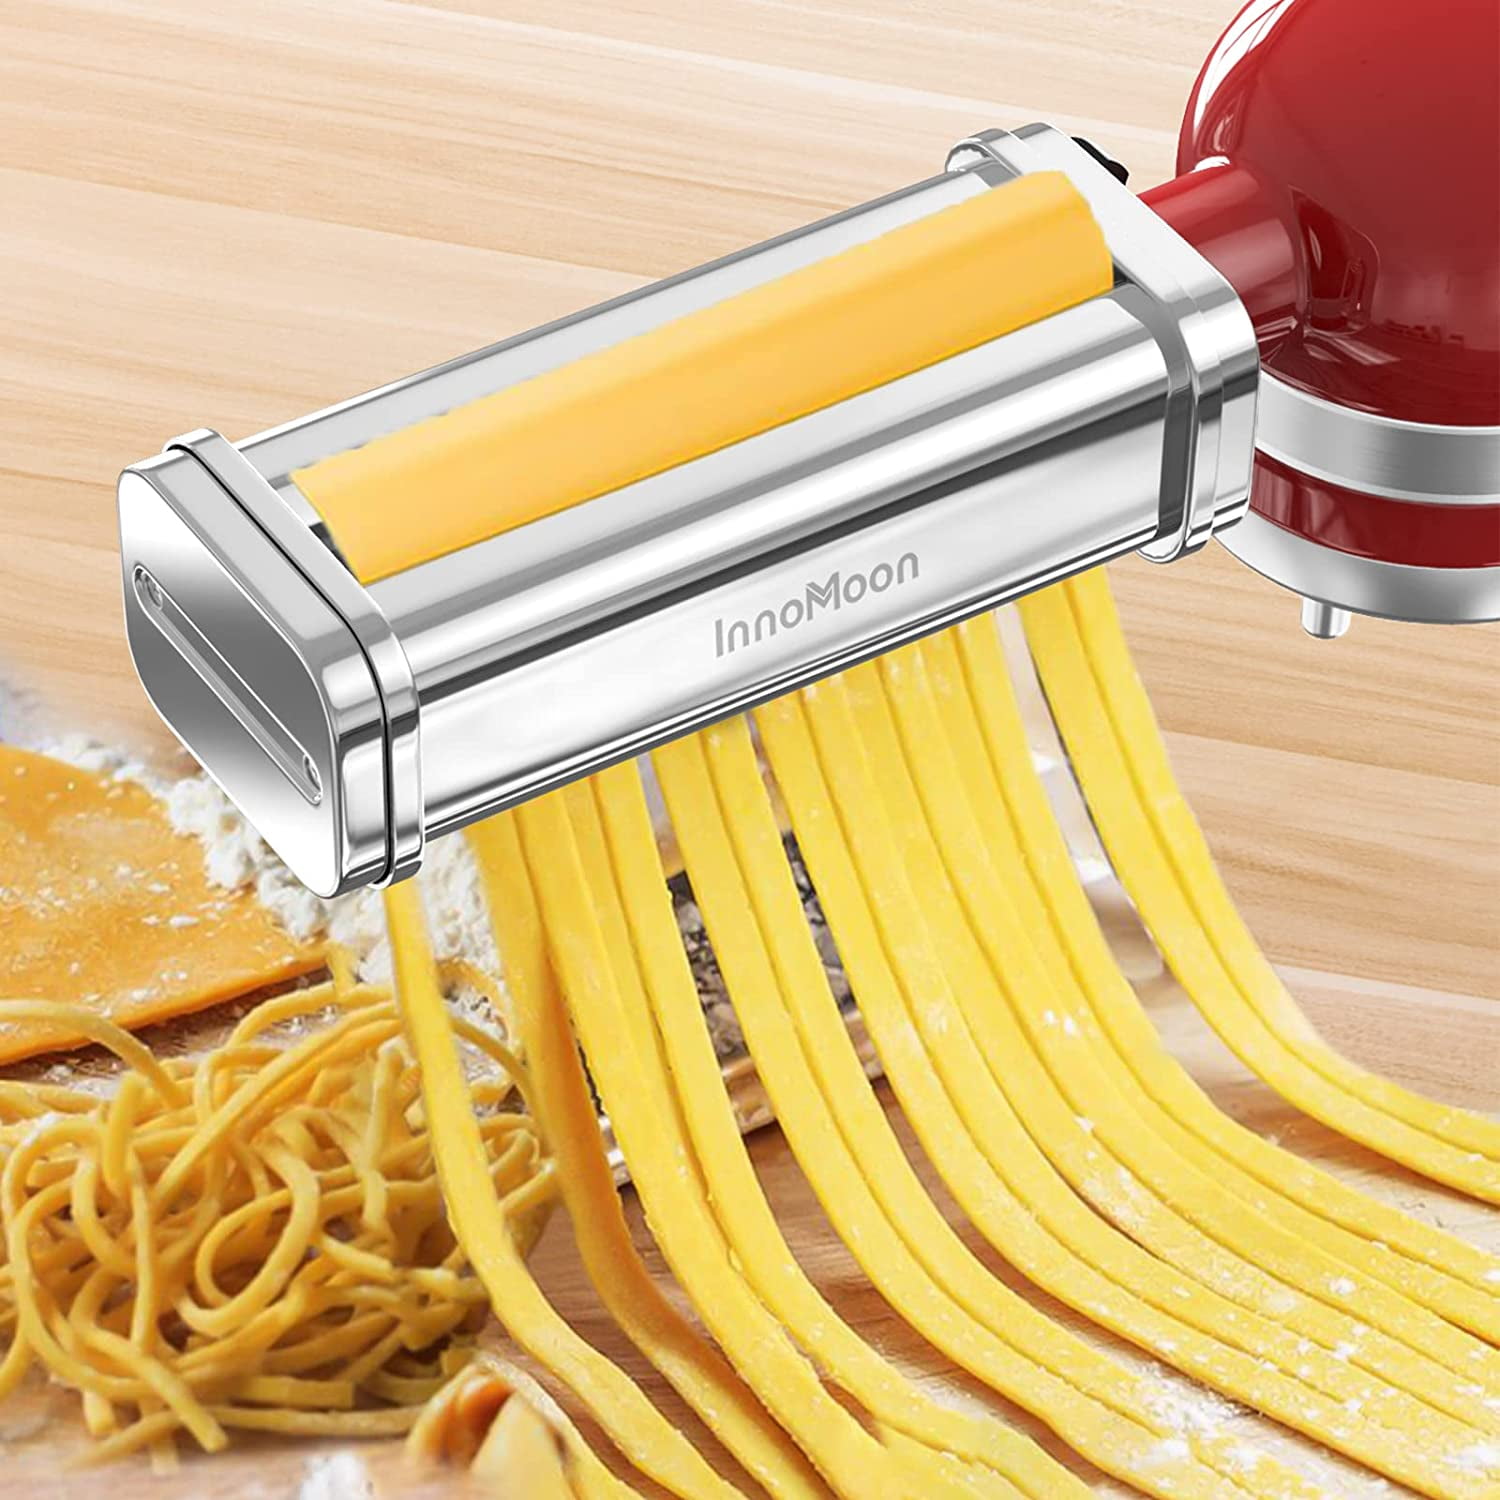 Pasta Maker Attachment for Kitchenaid Mixers, Noodle Maker 3 in 1